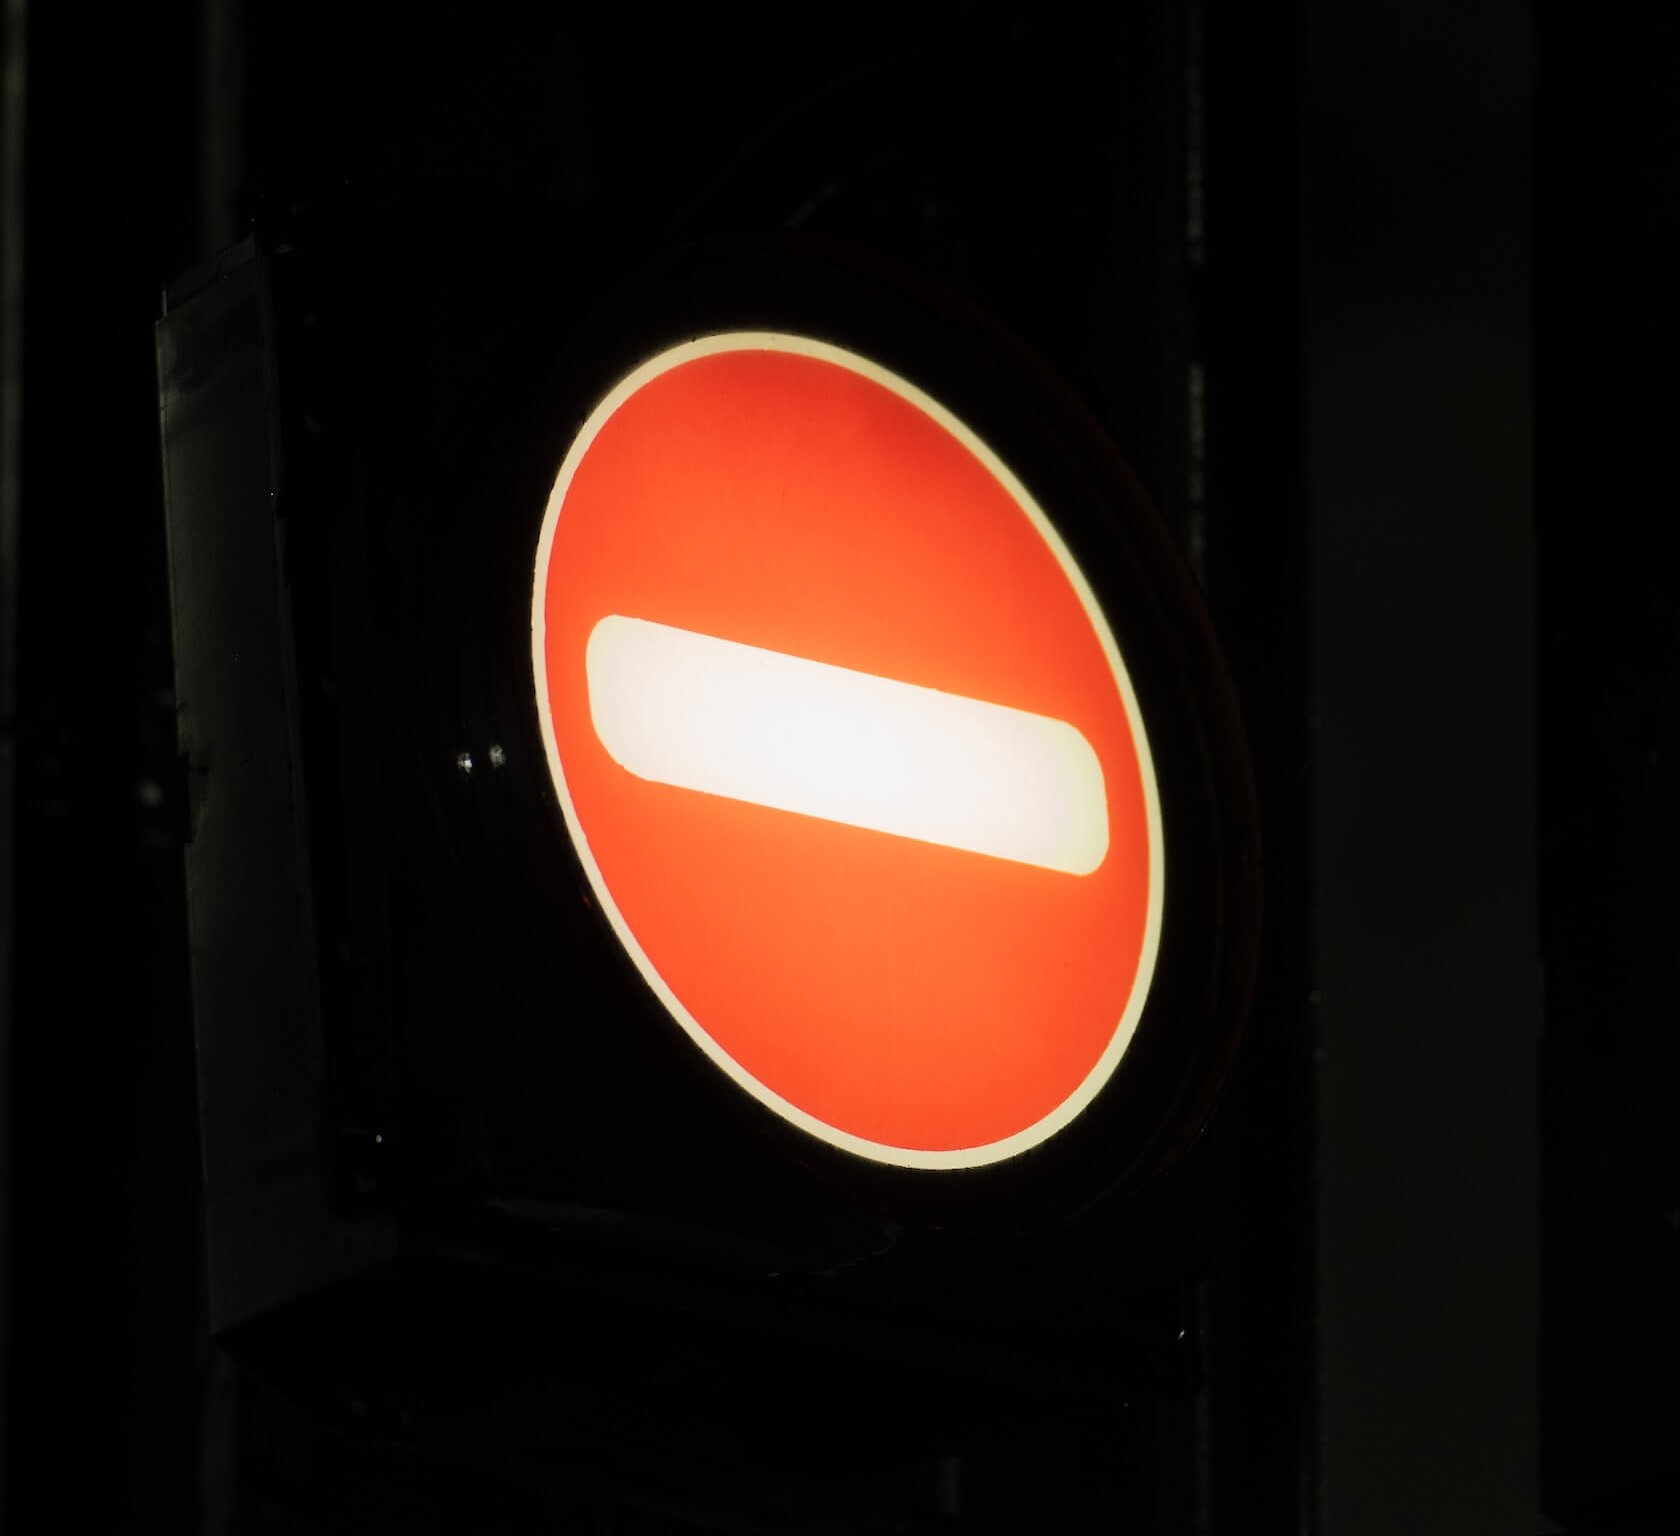 A traffic sign